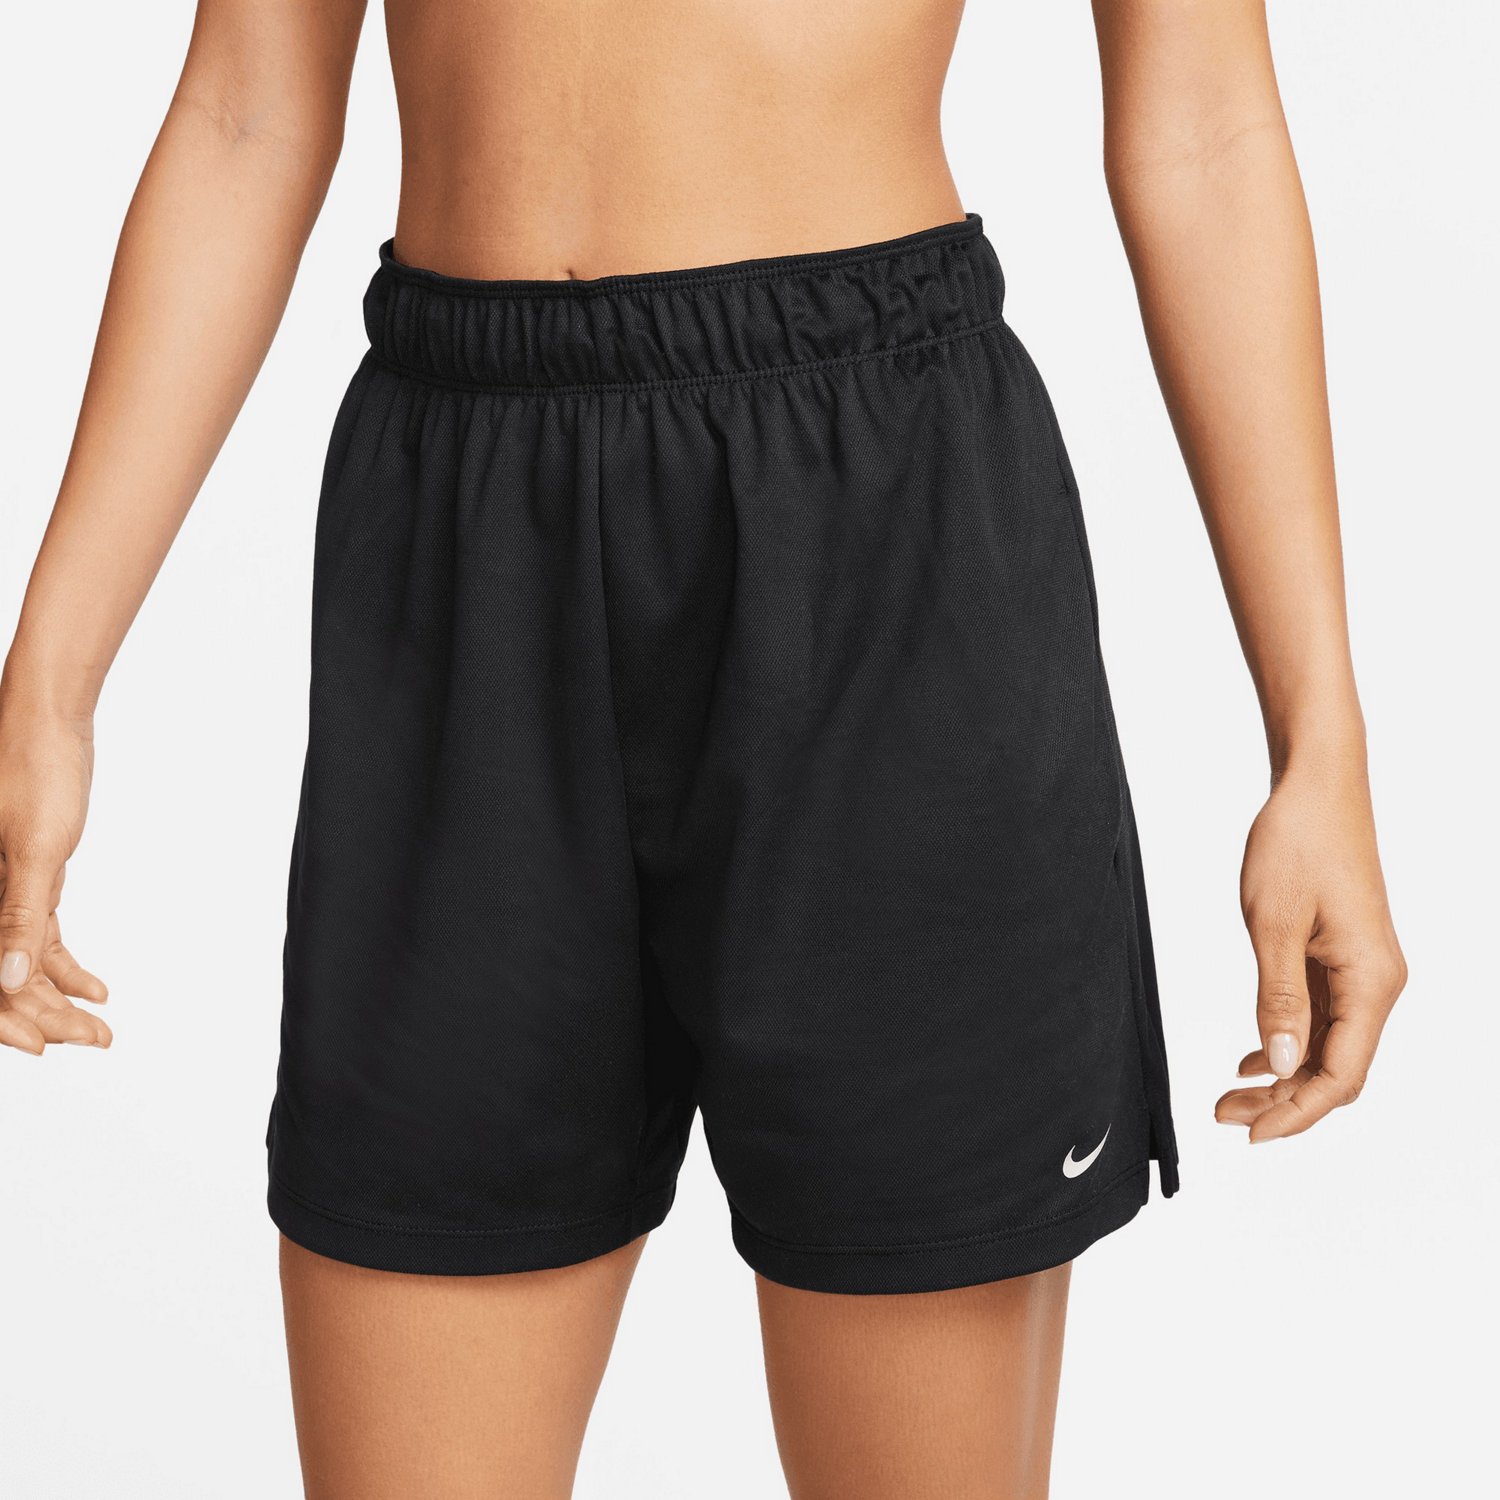 Nike Women's Dri-FIT Attack Training Shorts 5 in